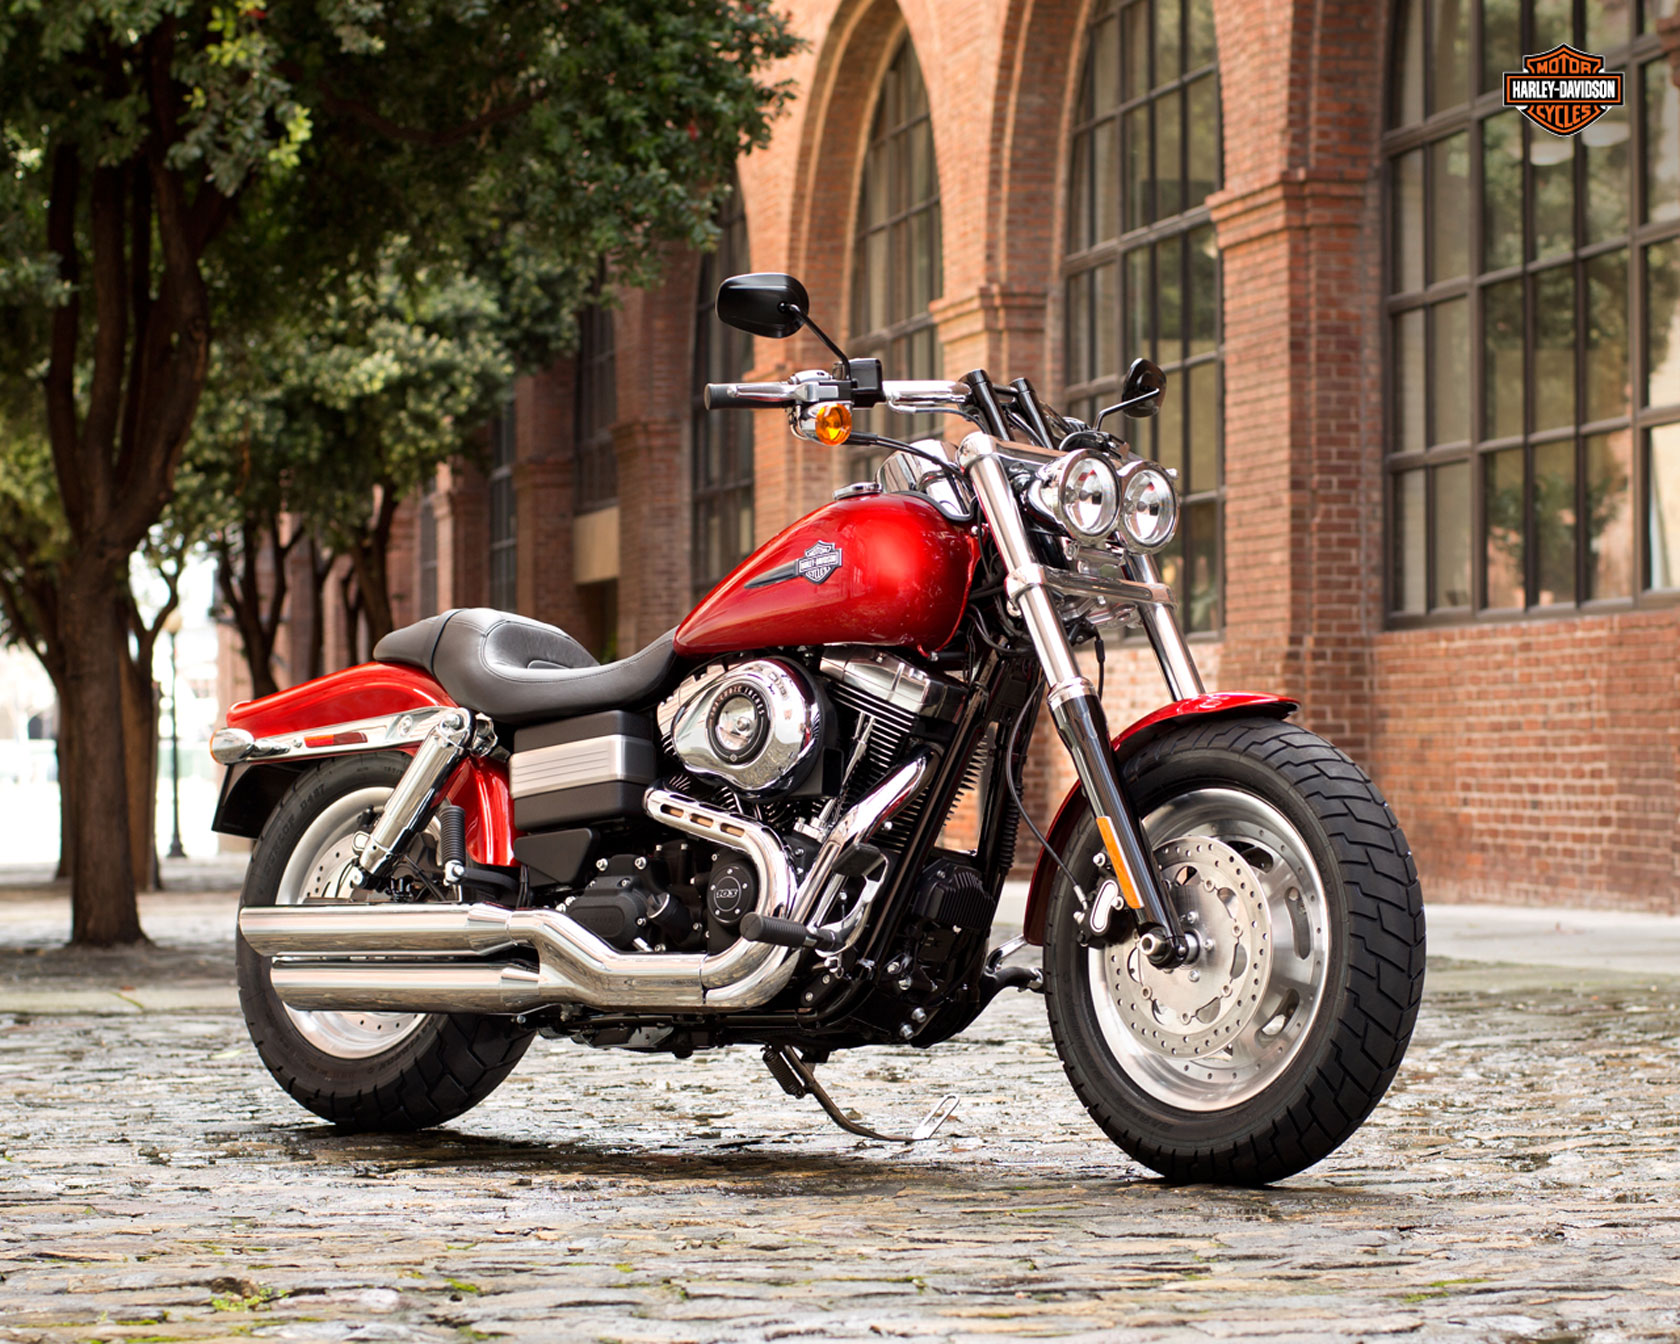 2013 Harley Davidson Fxdf Dyna Fat Bob Review